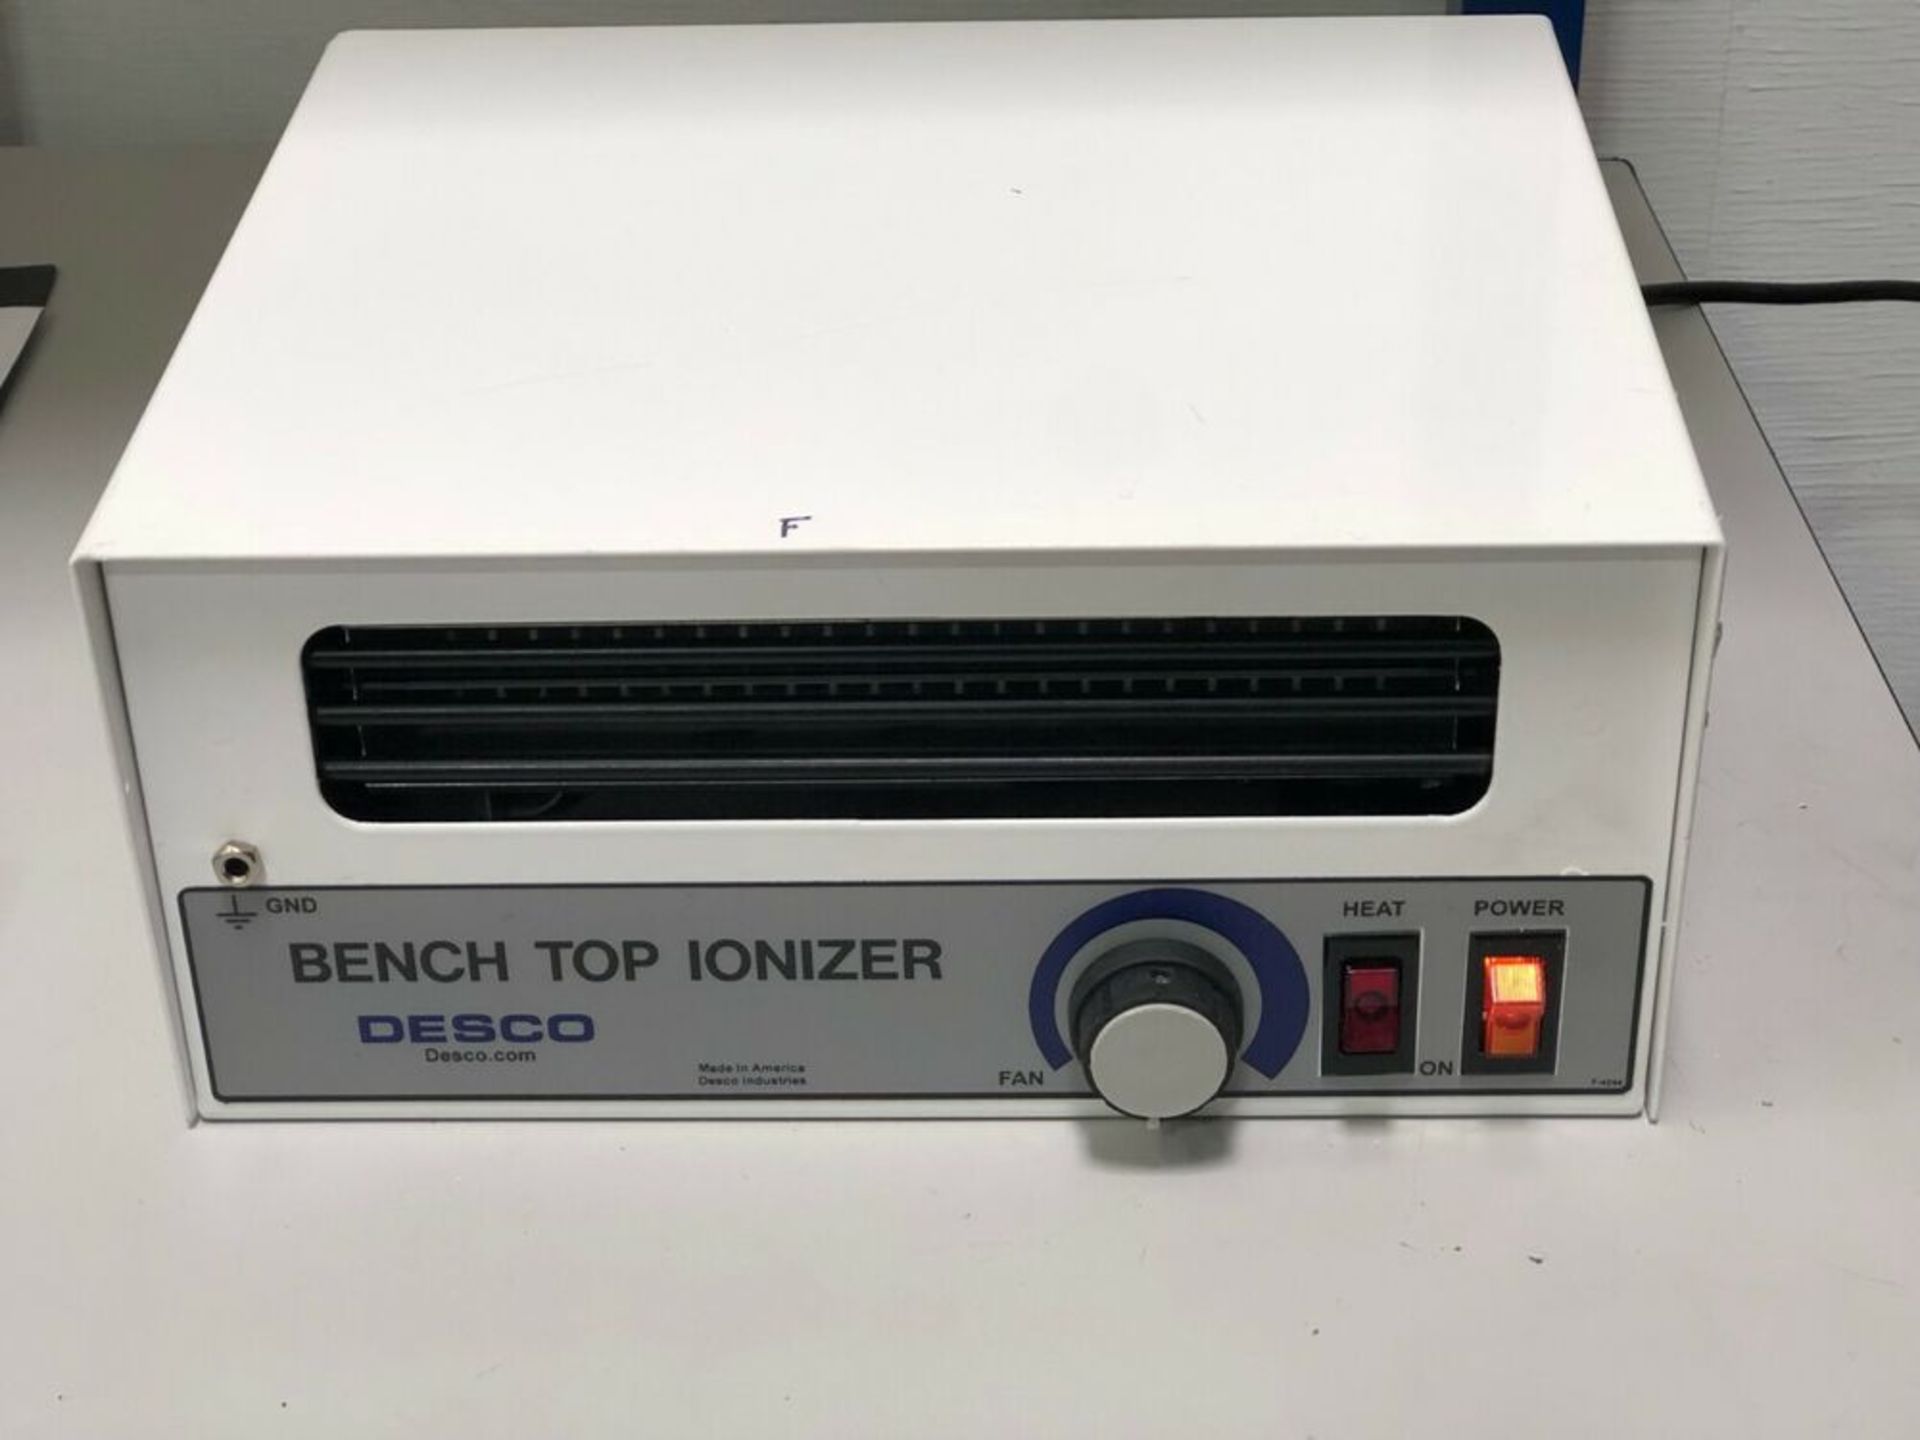 Desco 19500 Bench Top Benchtop Cleanroom Ionizer Blower w/ Heat 120VAC - Image 2 of 4